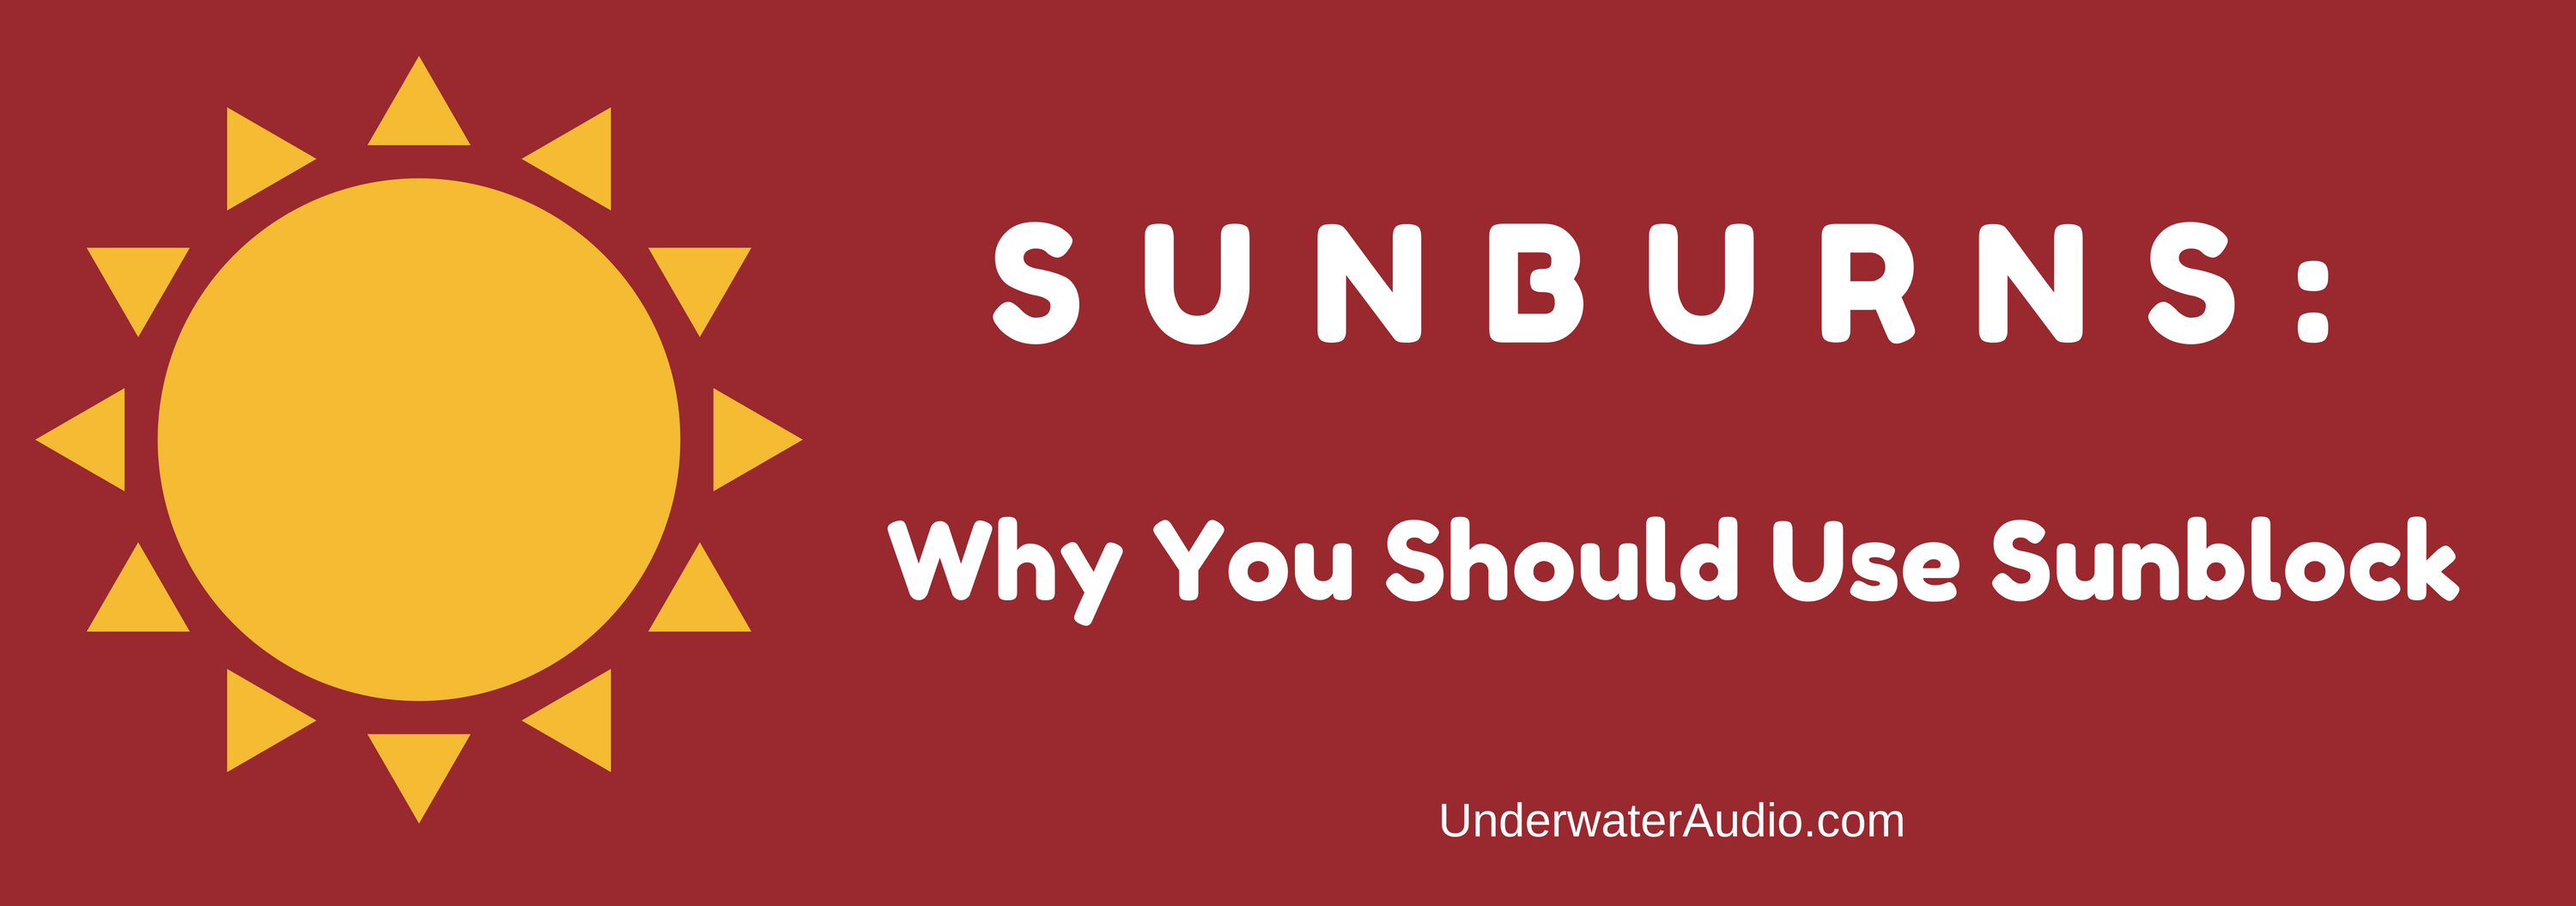 Sunburns: Why You Should Use Sunblock